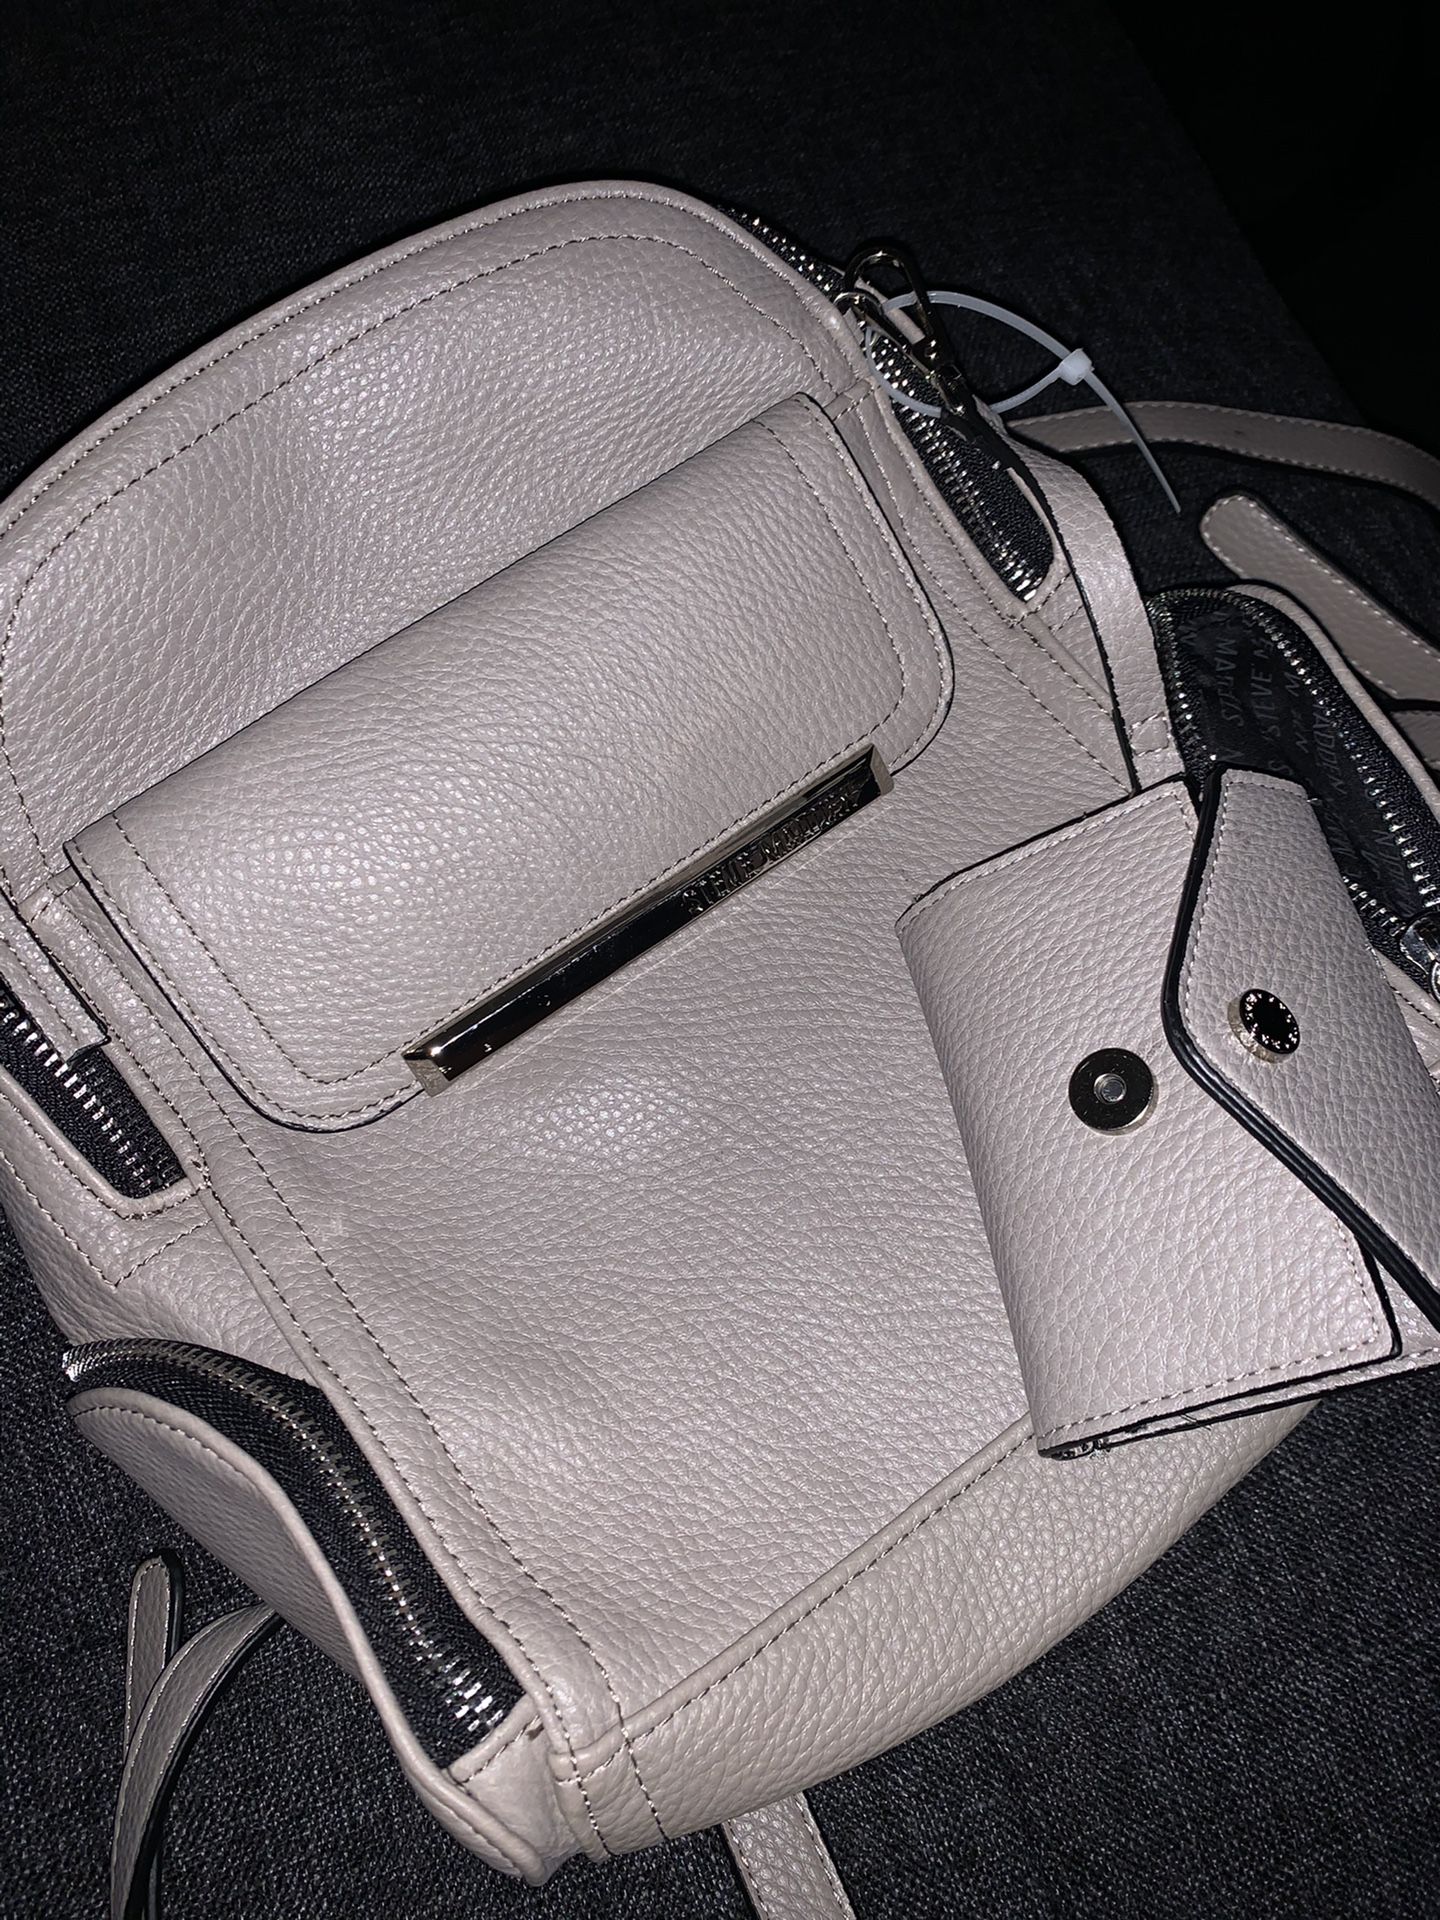 Steve Madden backpack purse